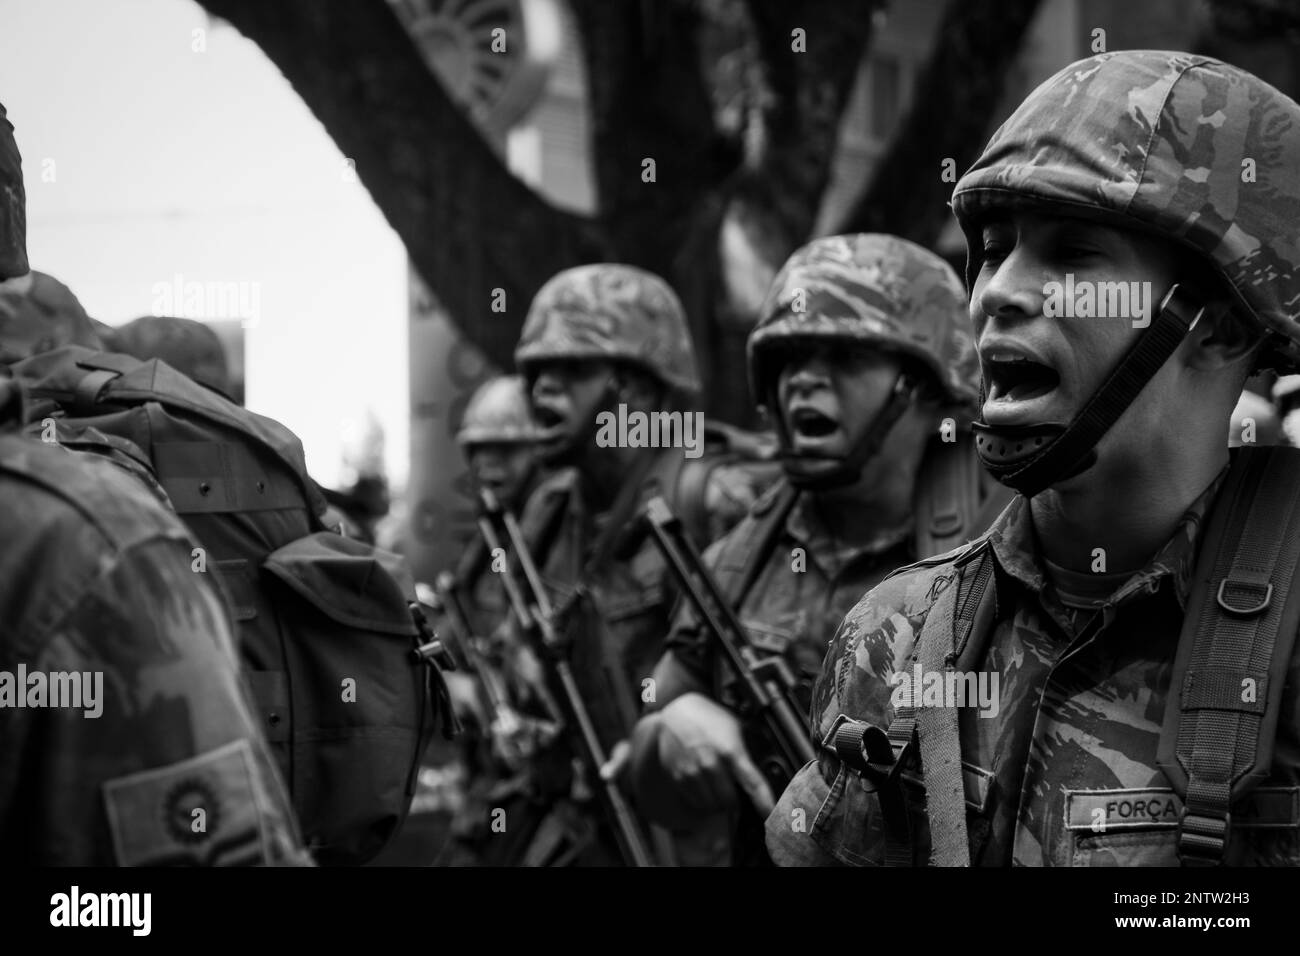 Salvador, Bahia, Brasilien - 07. September 2016: Schwarzes Porträt von Armeesoldaten am brasilianischen Unabhängigkeitstag in der Stadt Salvador, Bahia. Stockfoto